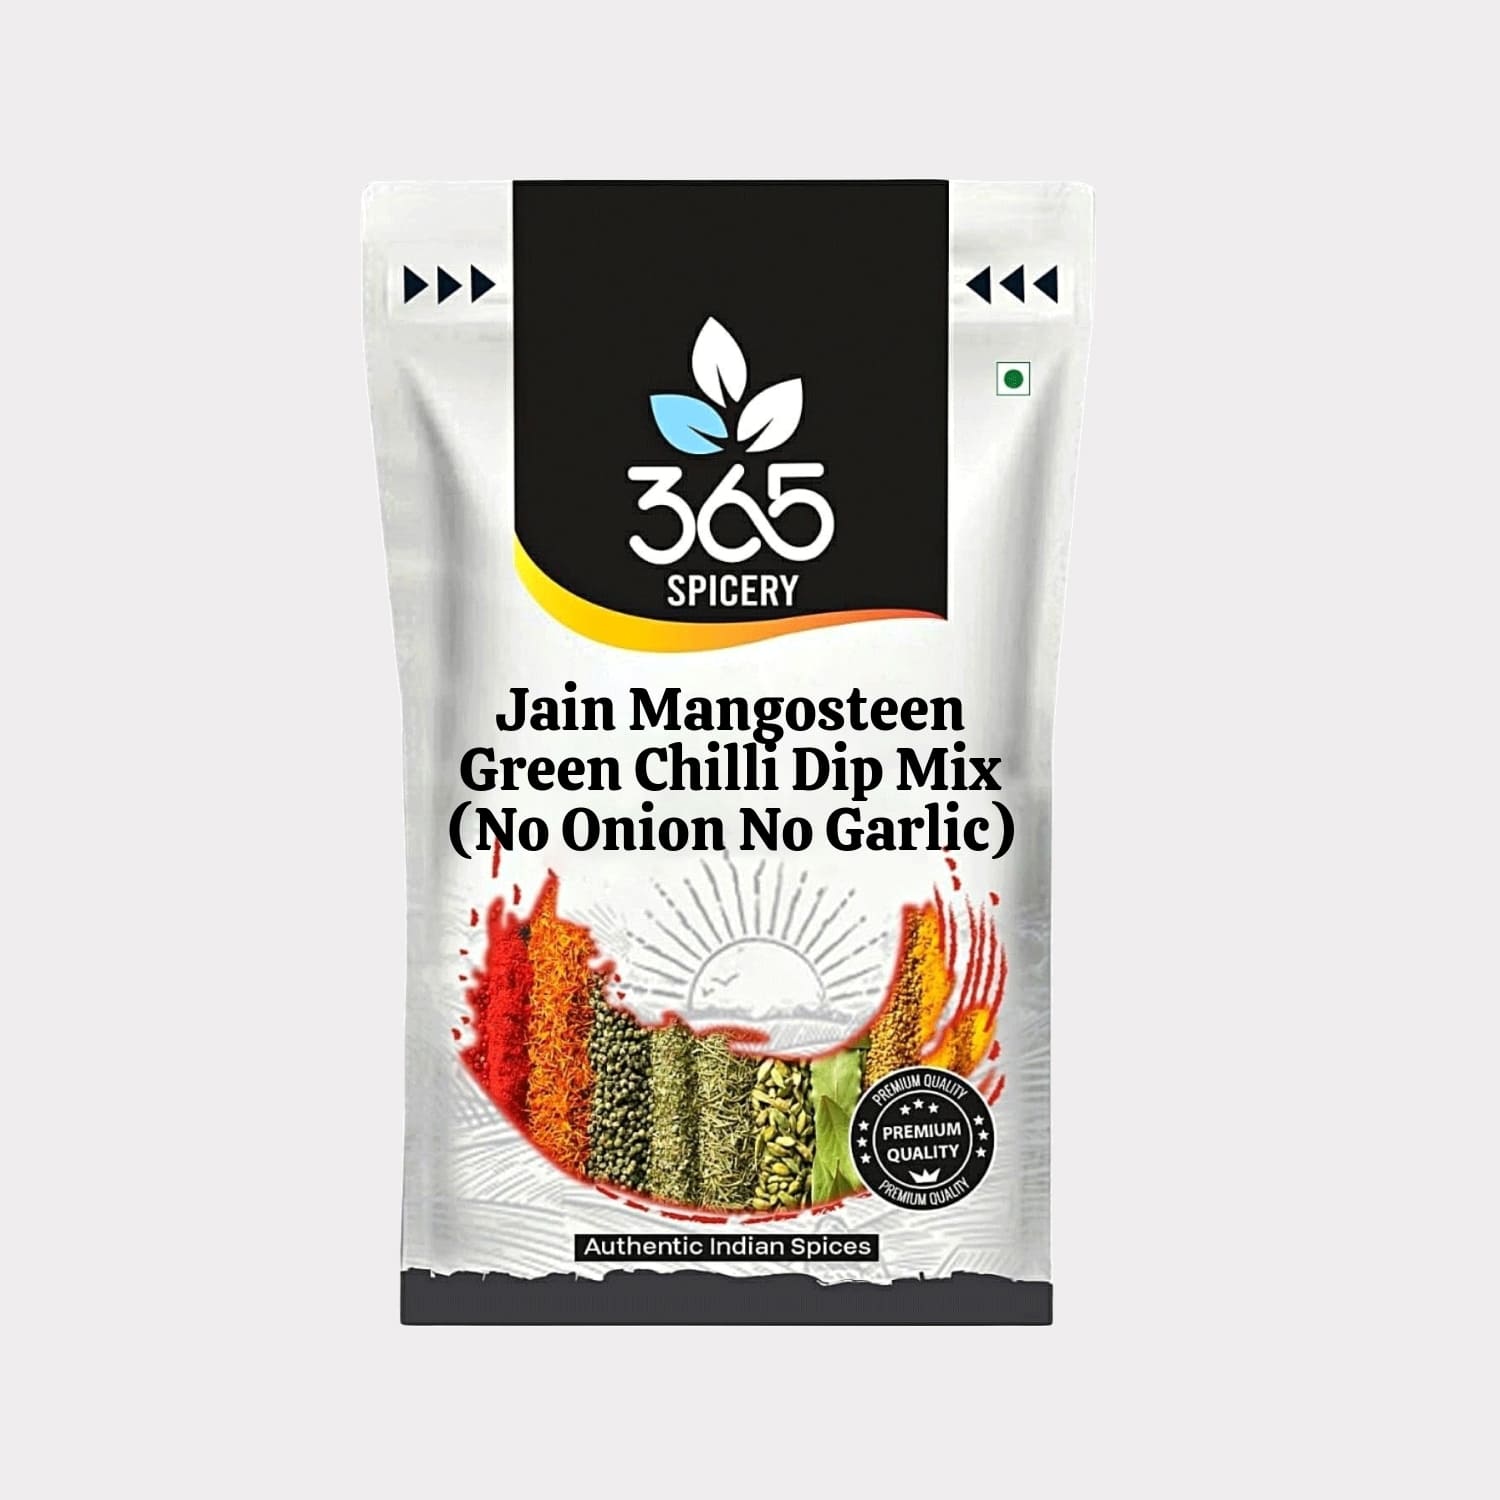 Jain Mangosteen Green Chilli Dip Mix (No Onion No Garlic)